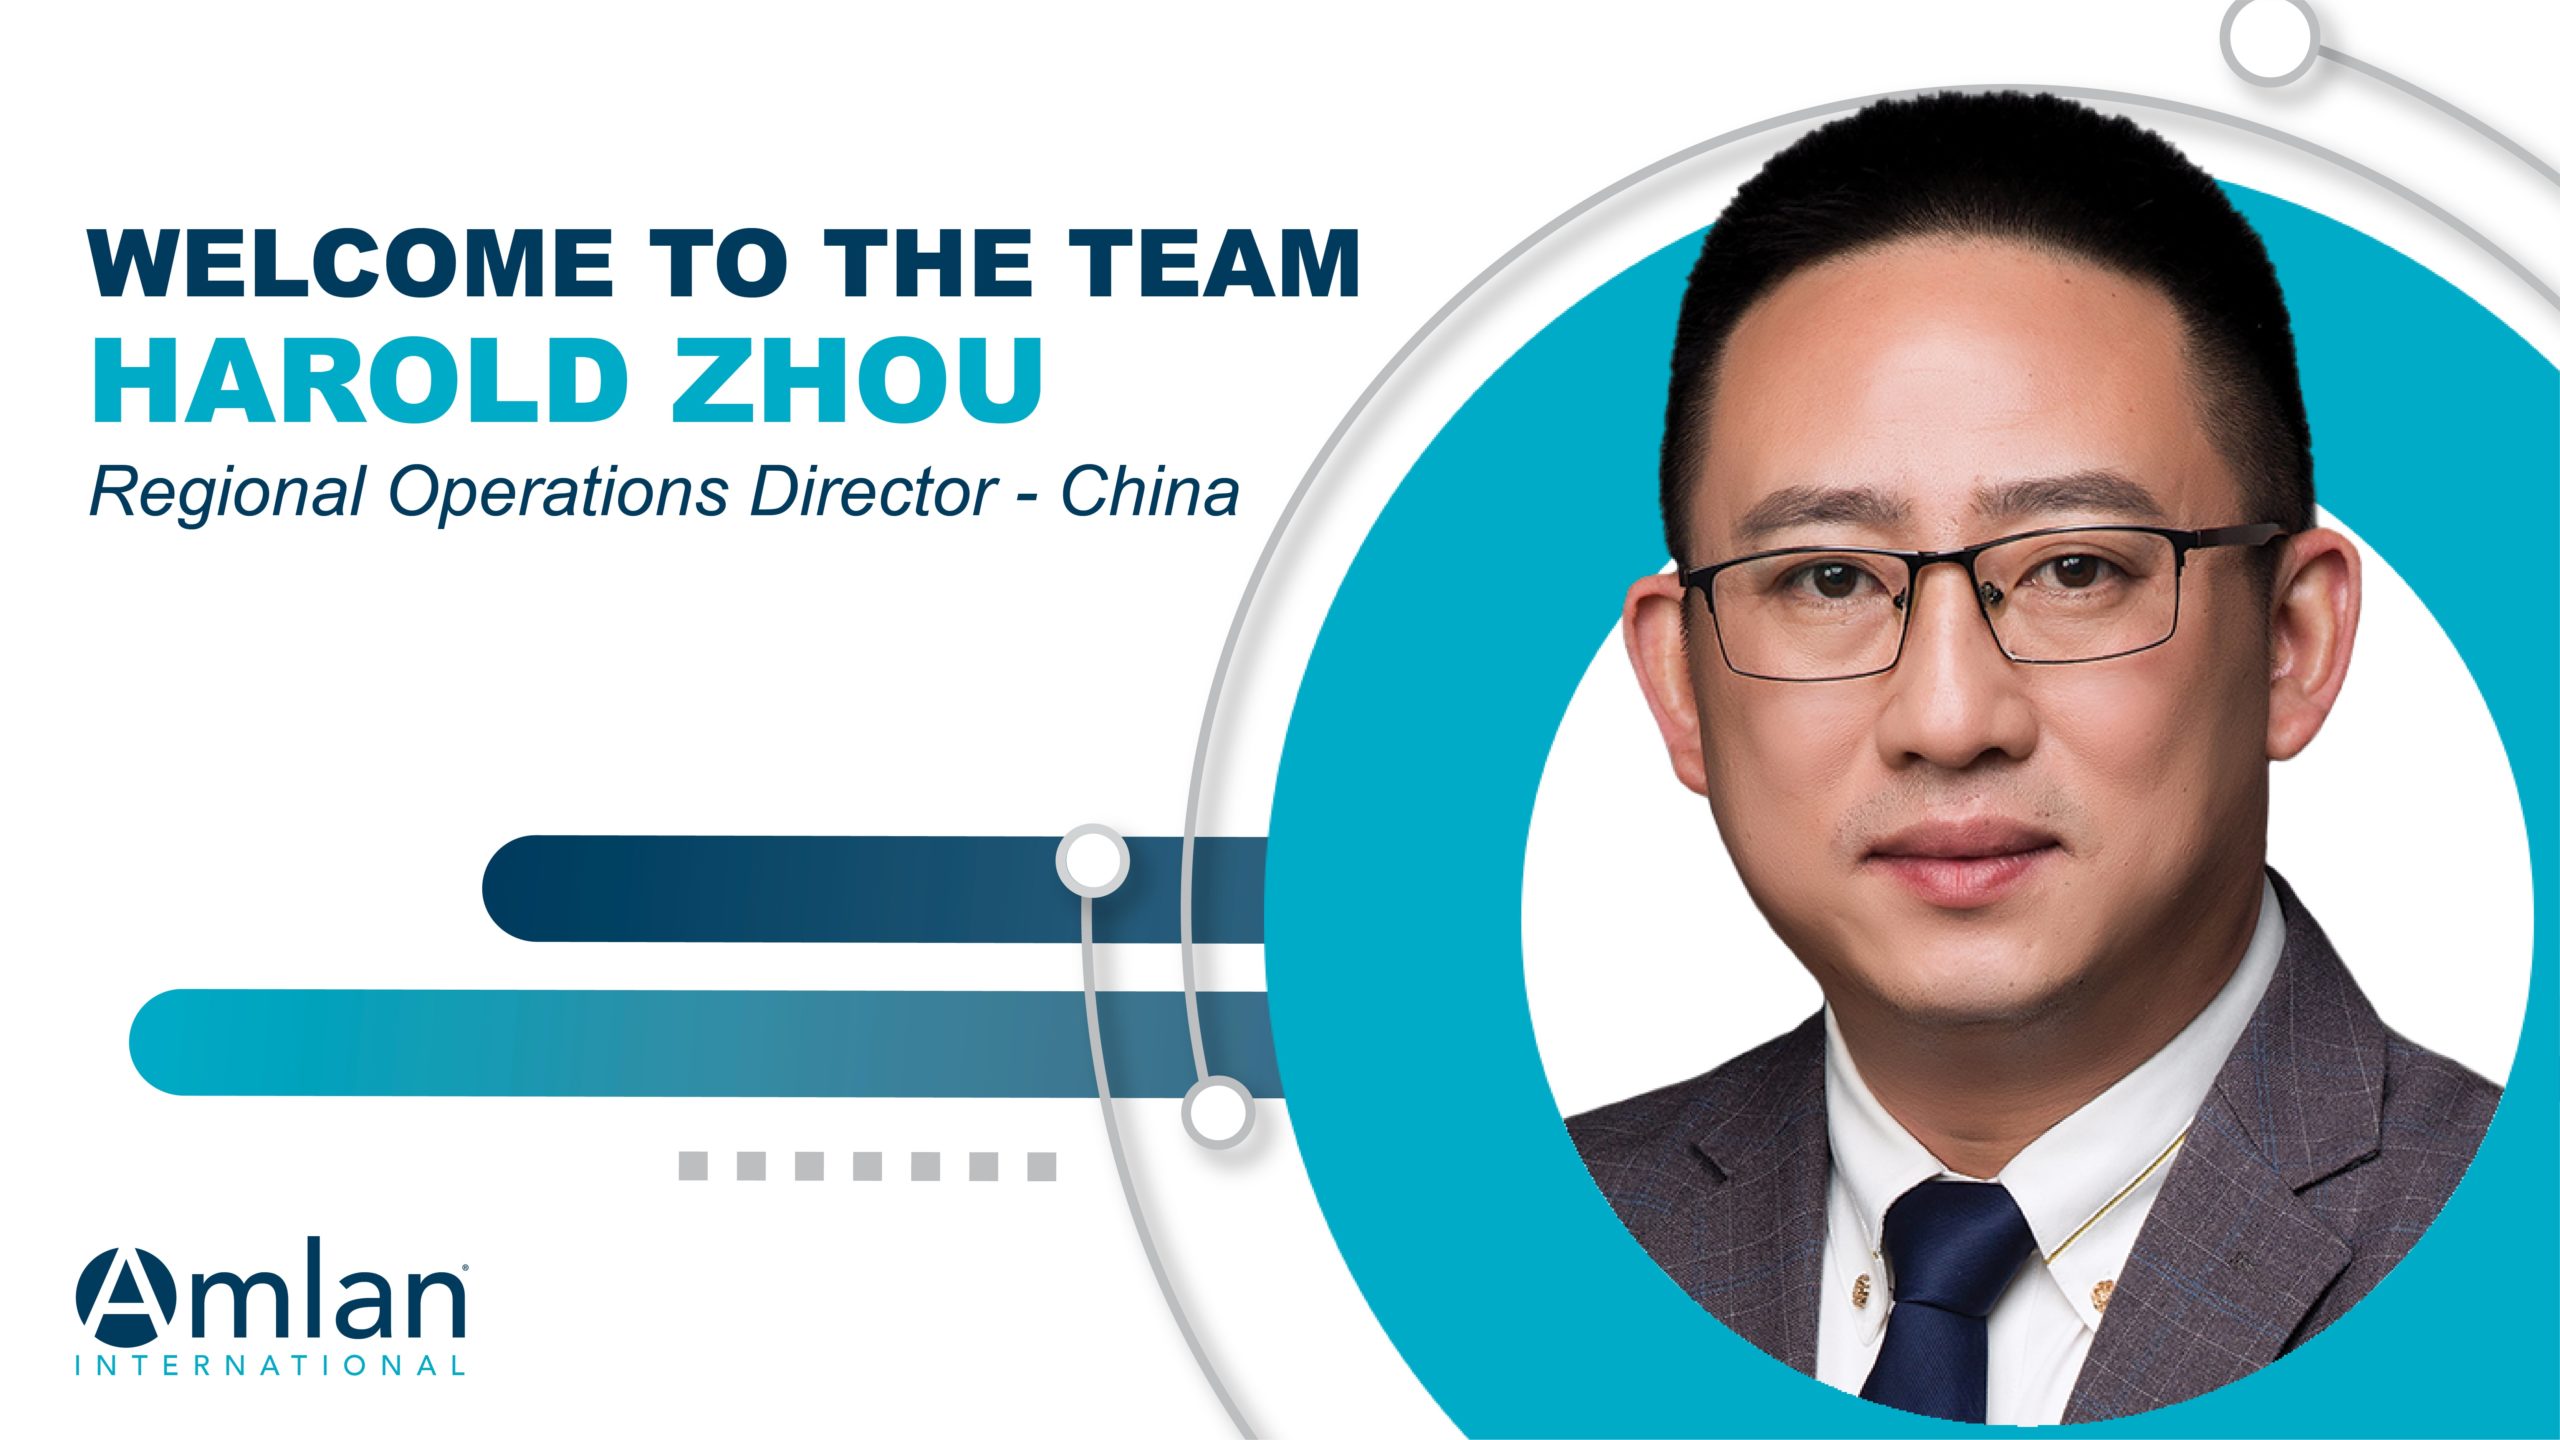 Harold Zhou - Regional Operations Director - China.